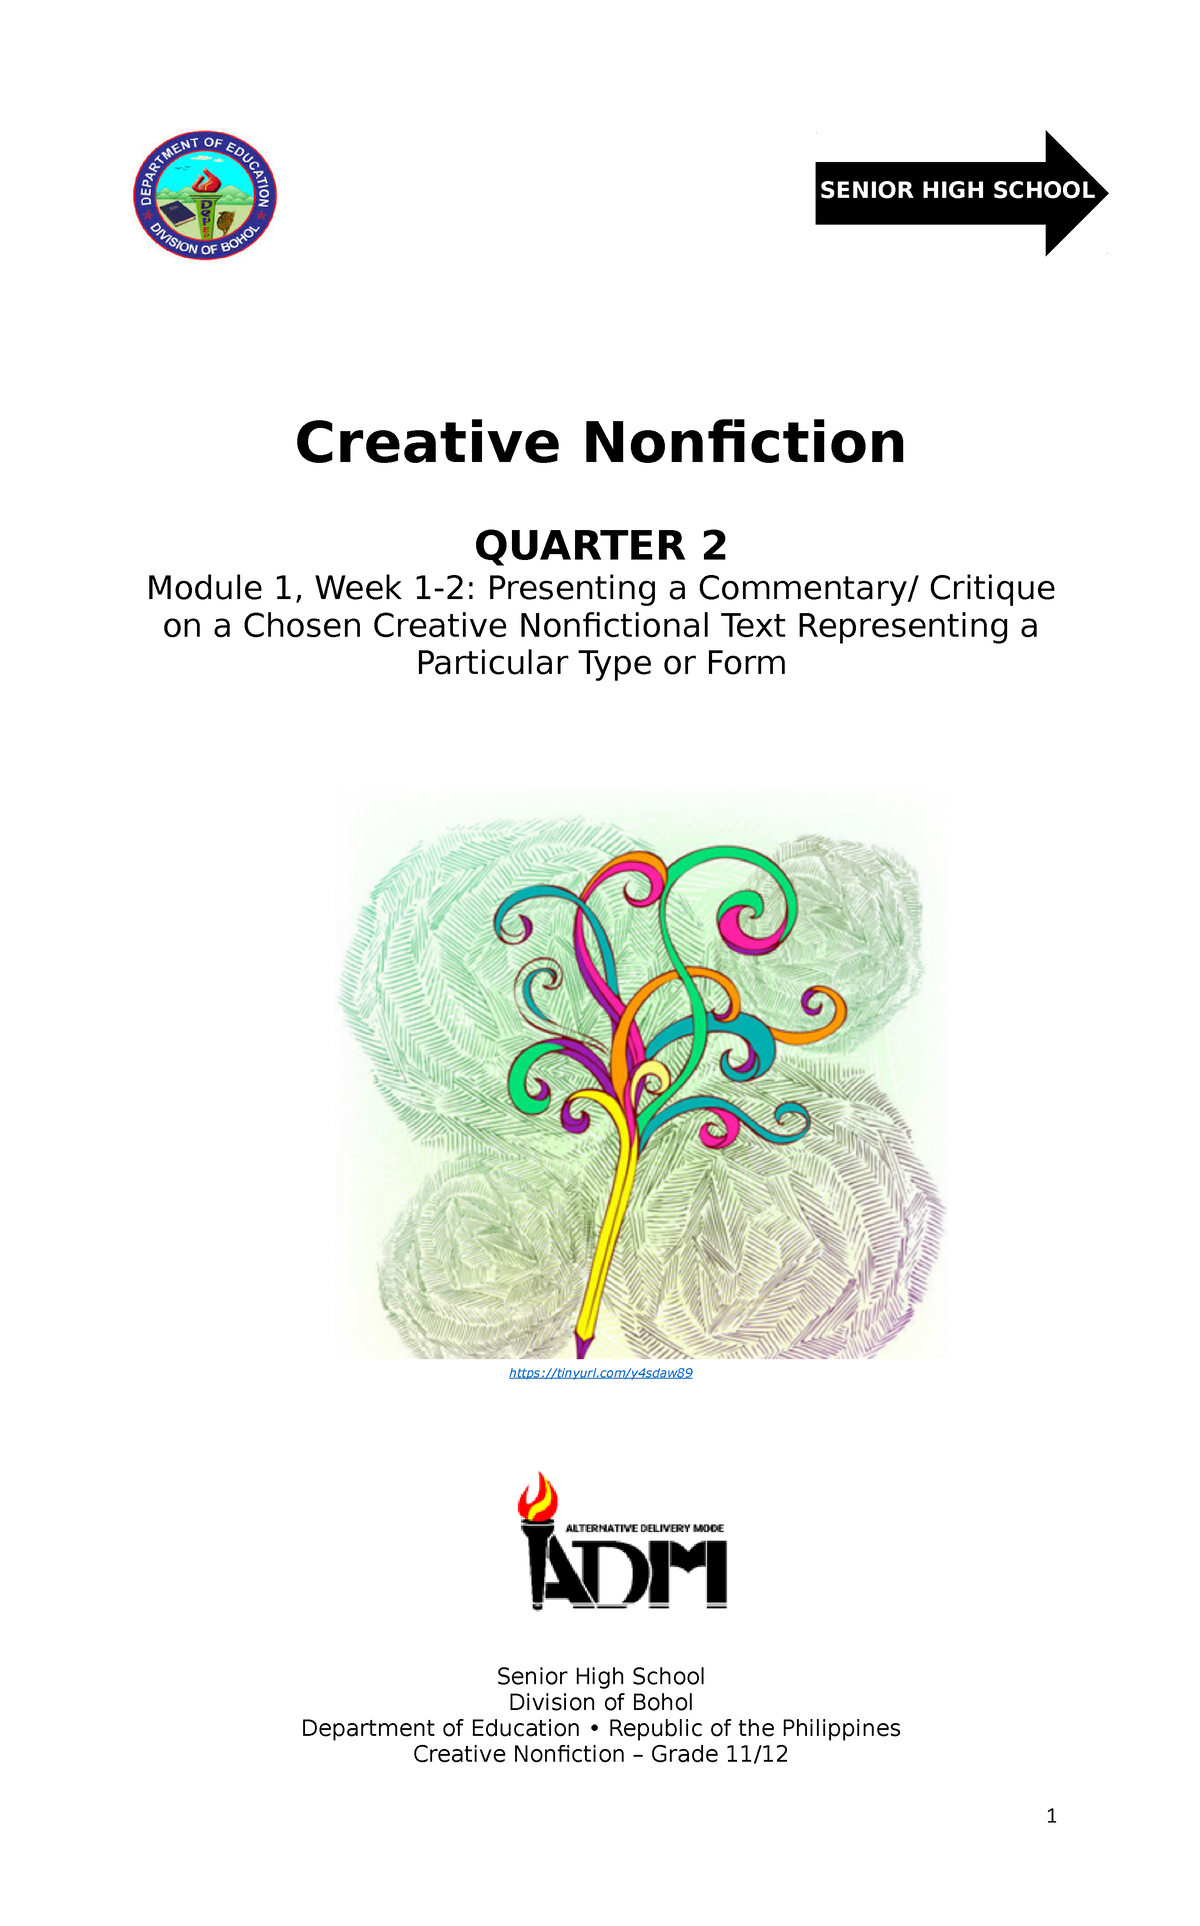 creative writing shs module